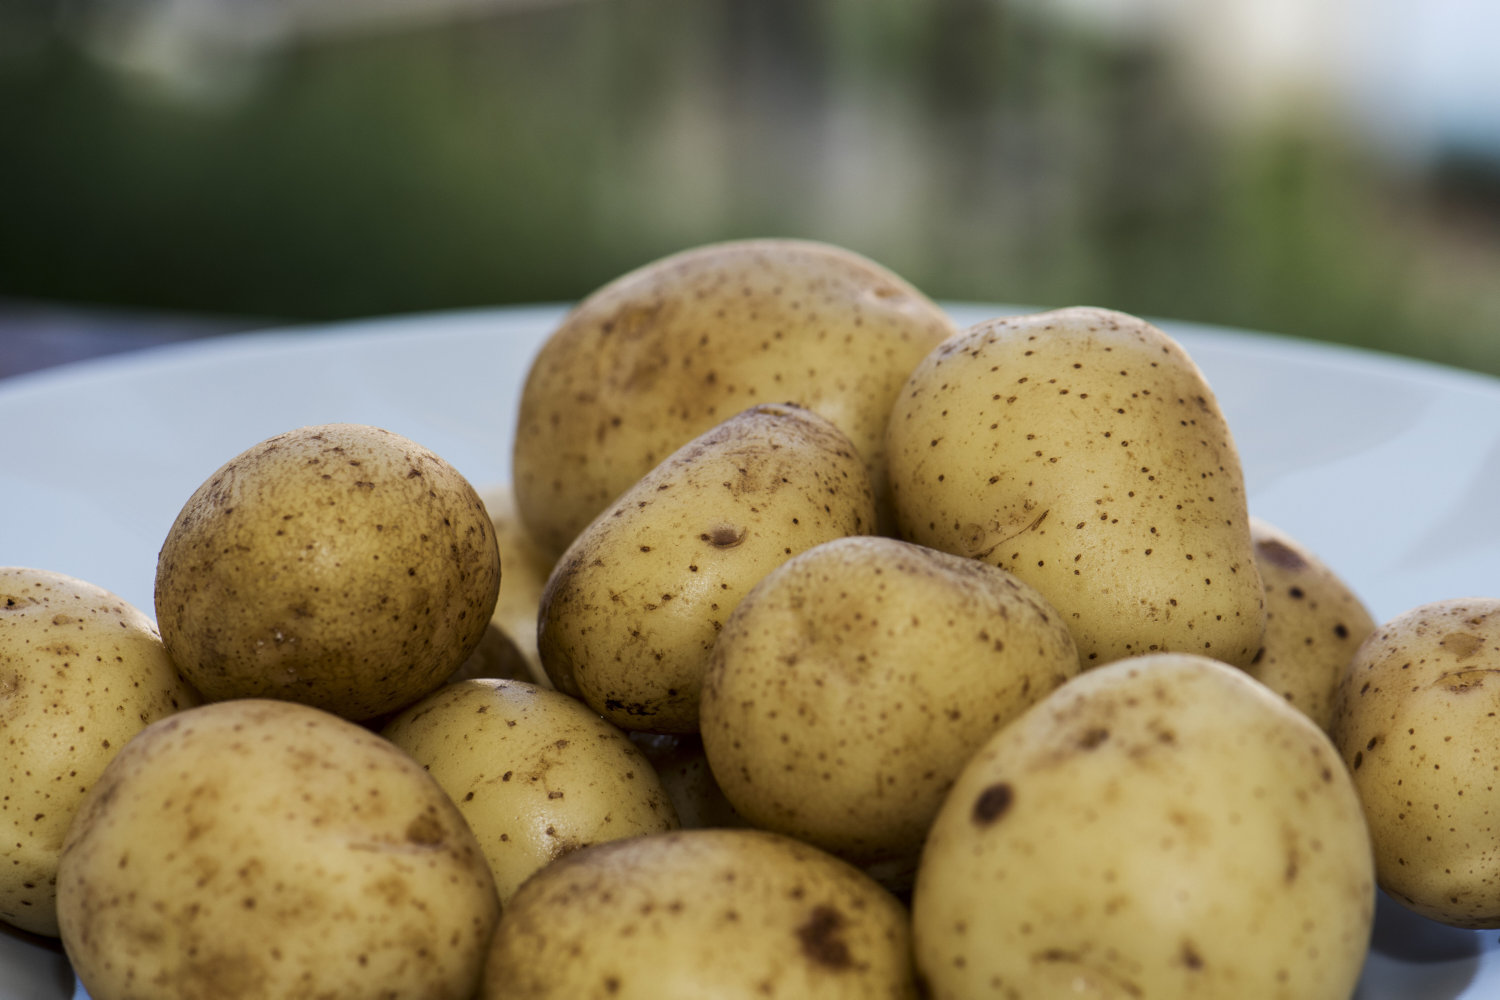 kom før dine venner: tyvstart årets kartoffelhøst